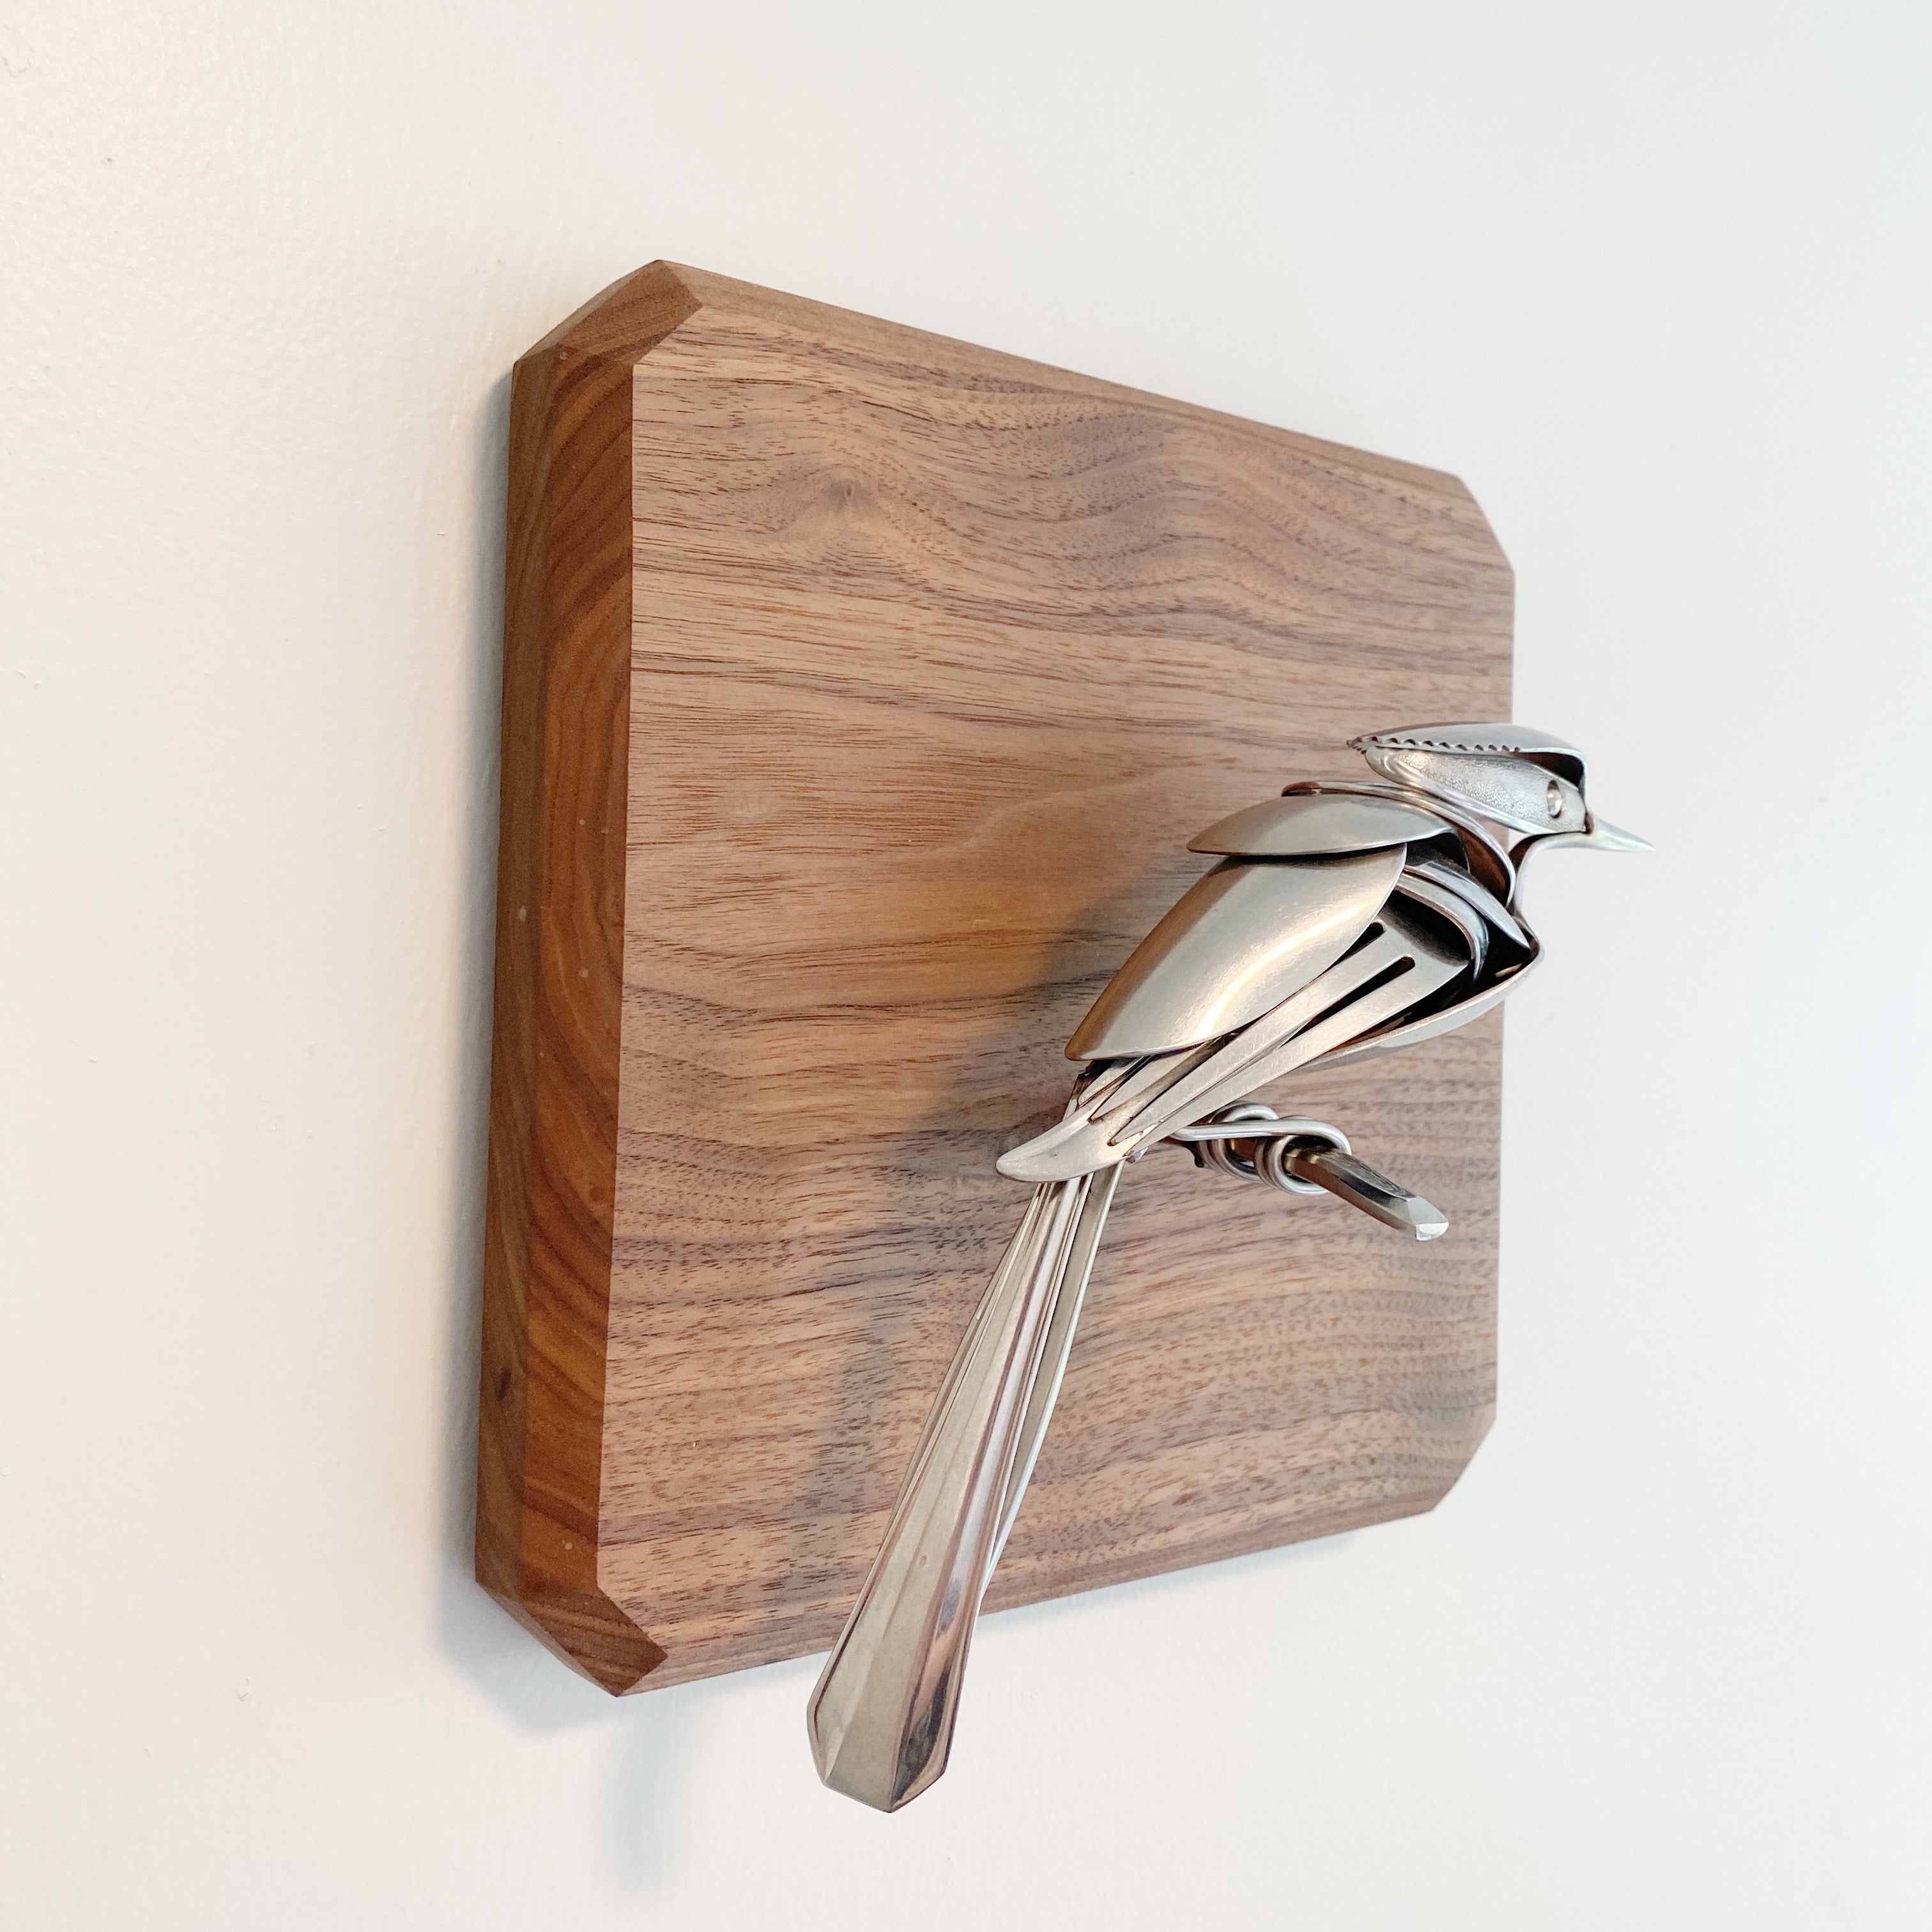 "Draper" - Upcycled Metal Bird Sculpture